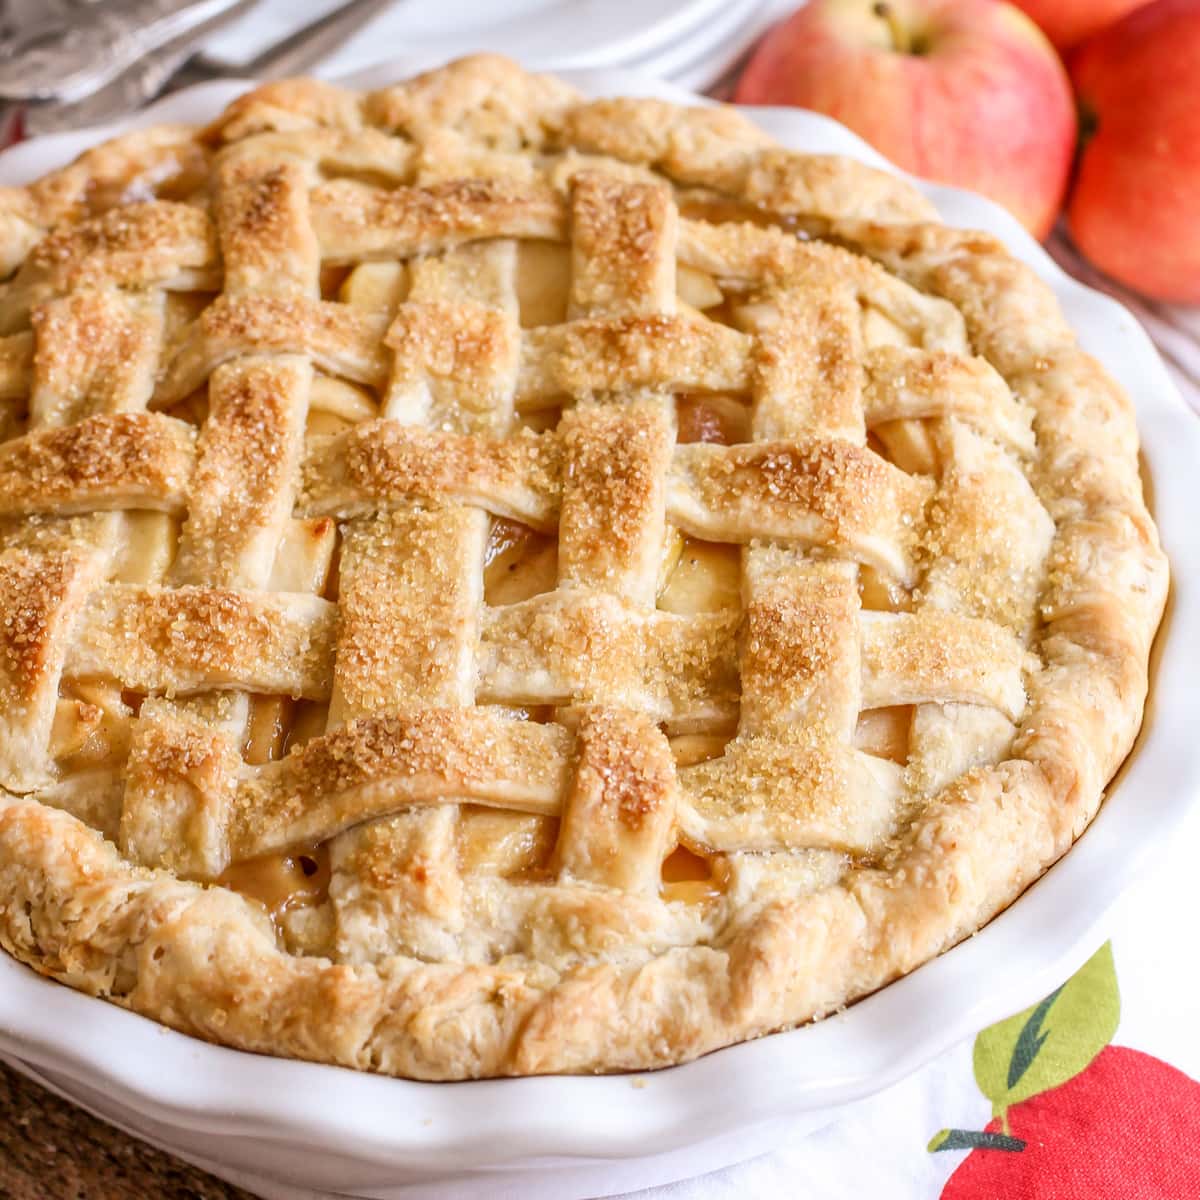 Thanksgiving desserts - an entire apple pie in a white pie pan.